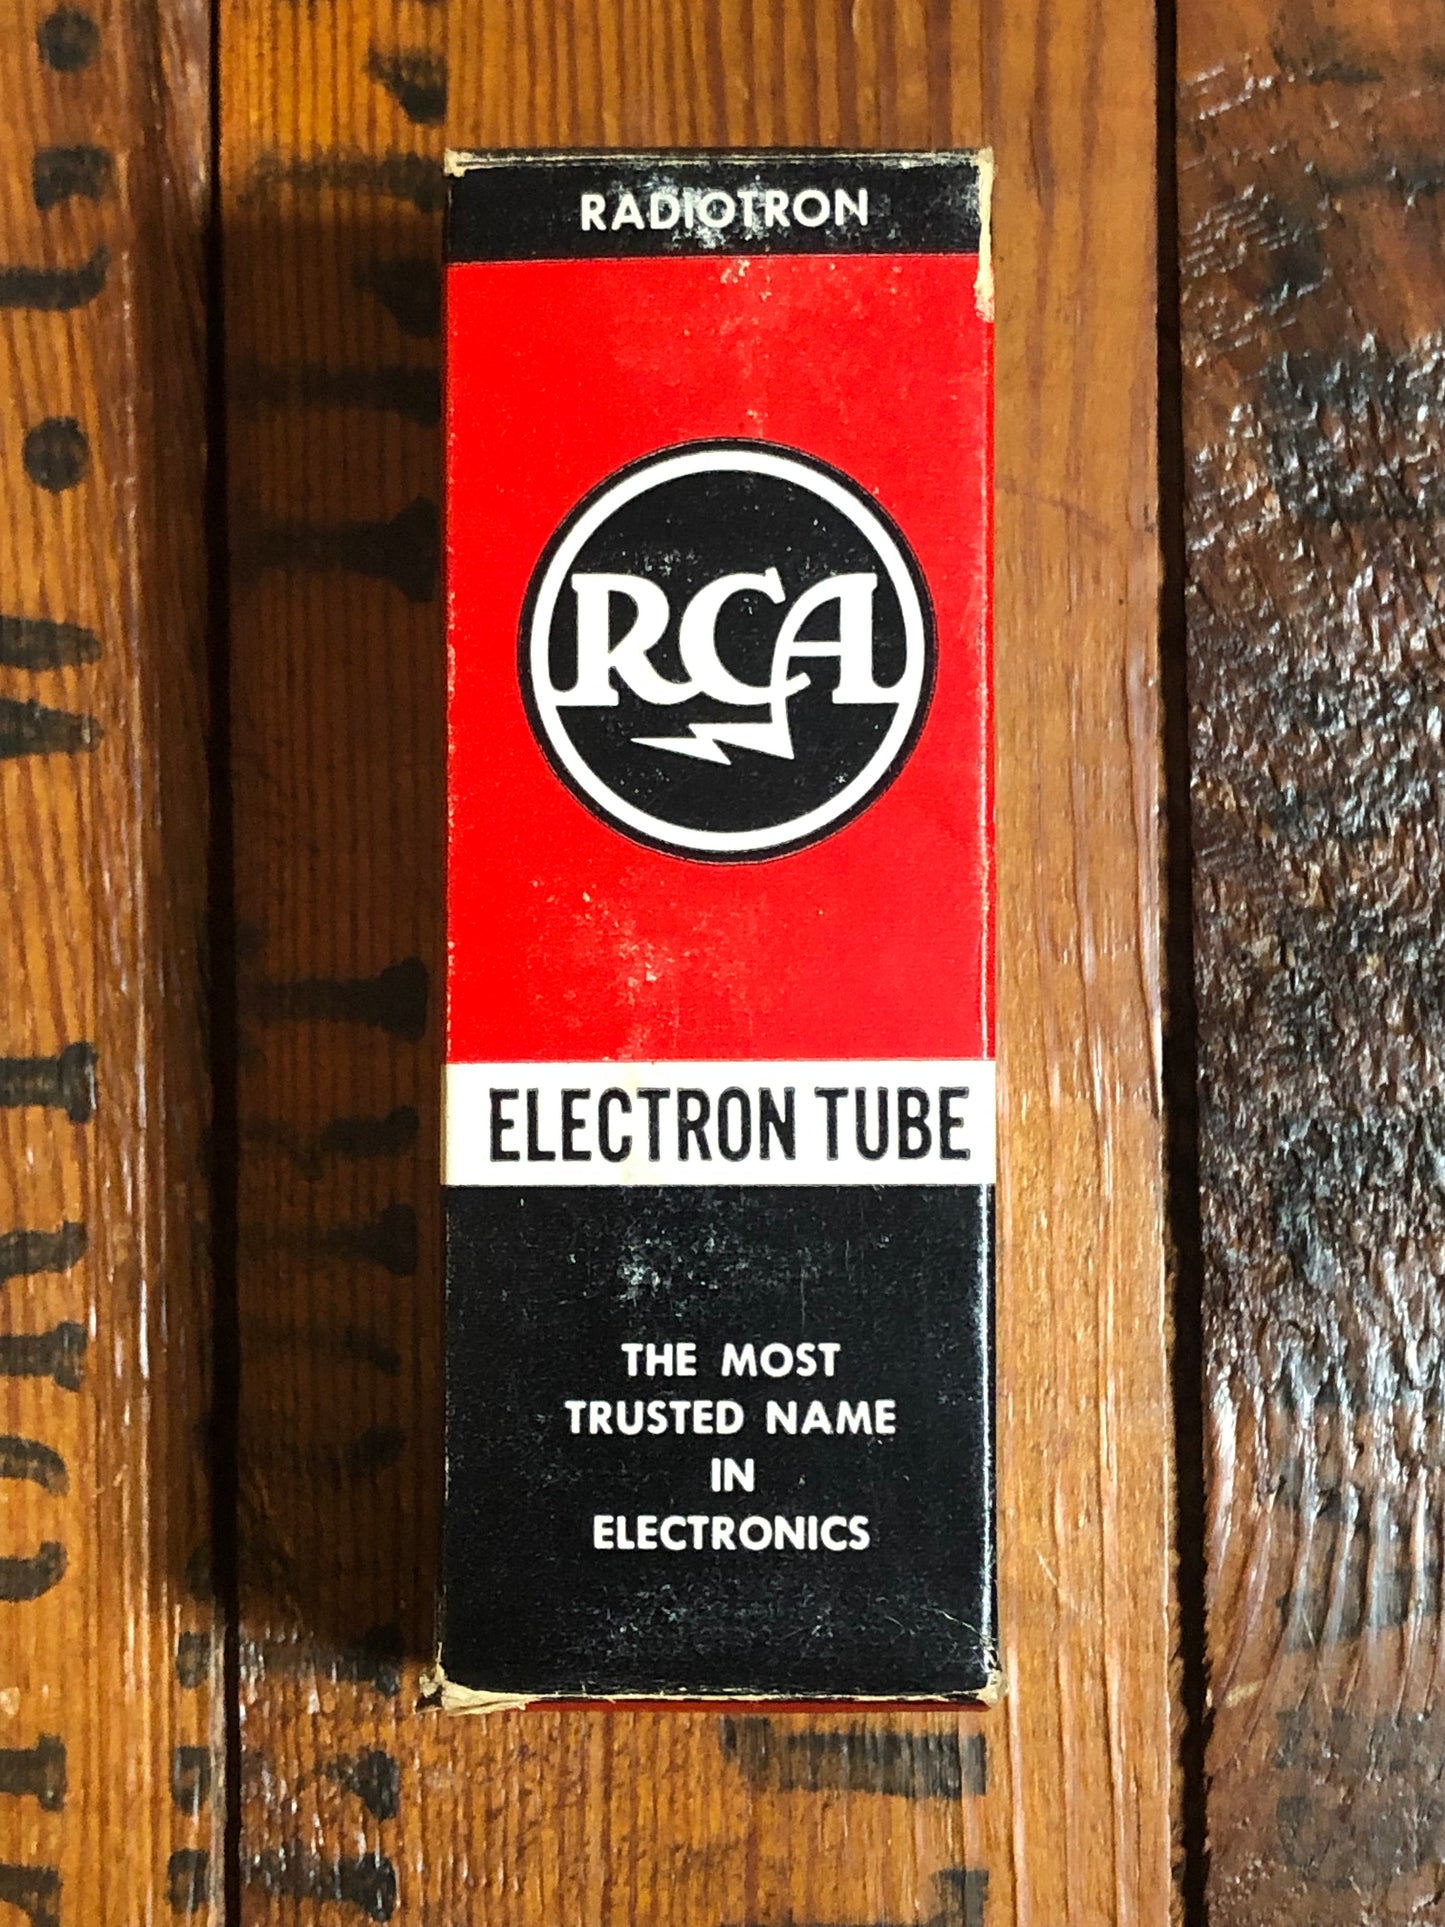 Vintage RCA 5U4GB Rectifier Tube w/ Original Box